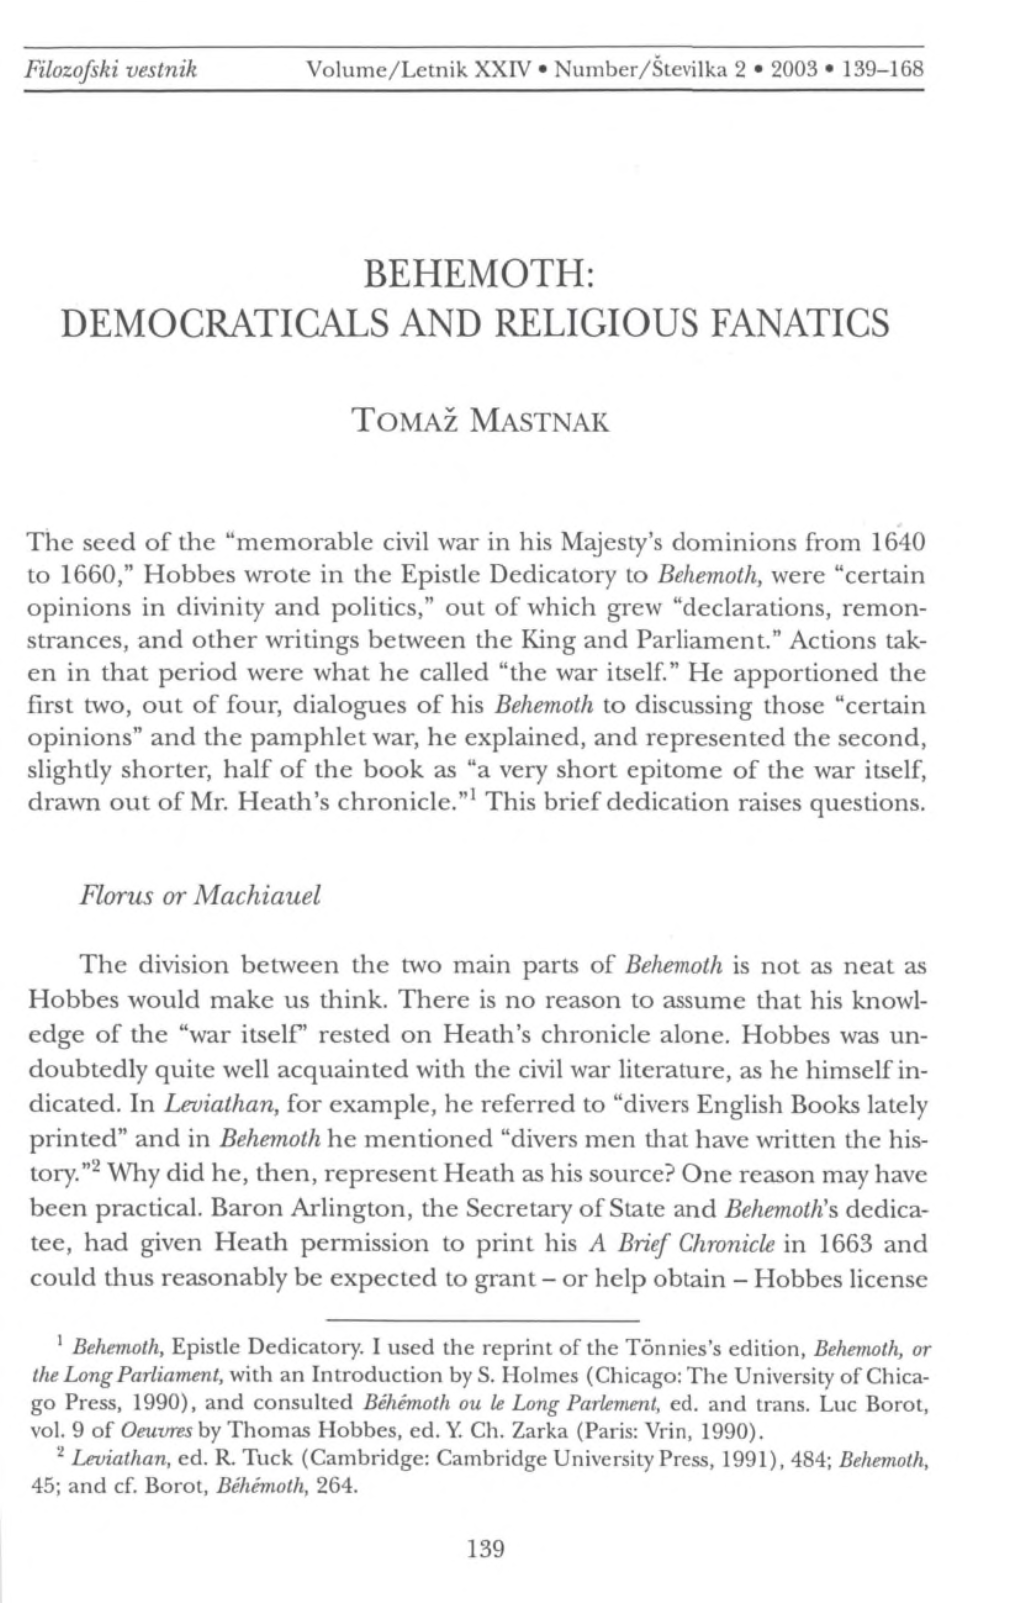 Democraticals and Religious Fanatics